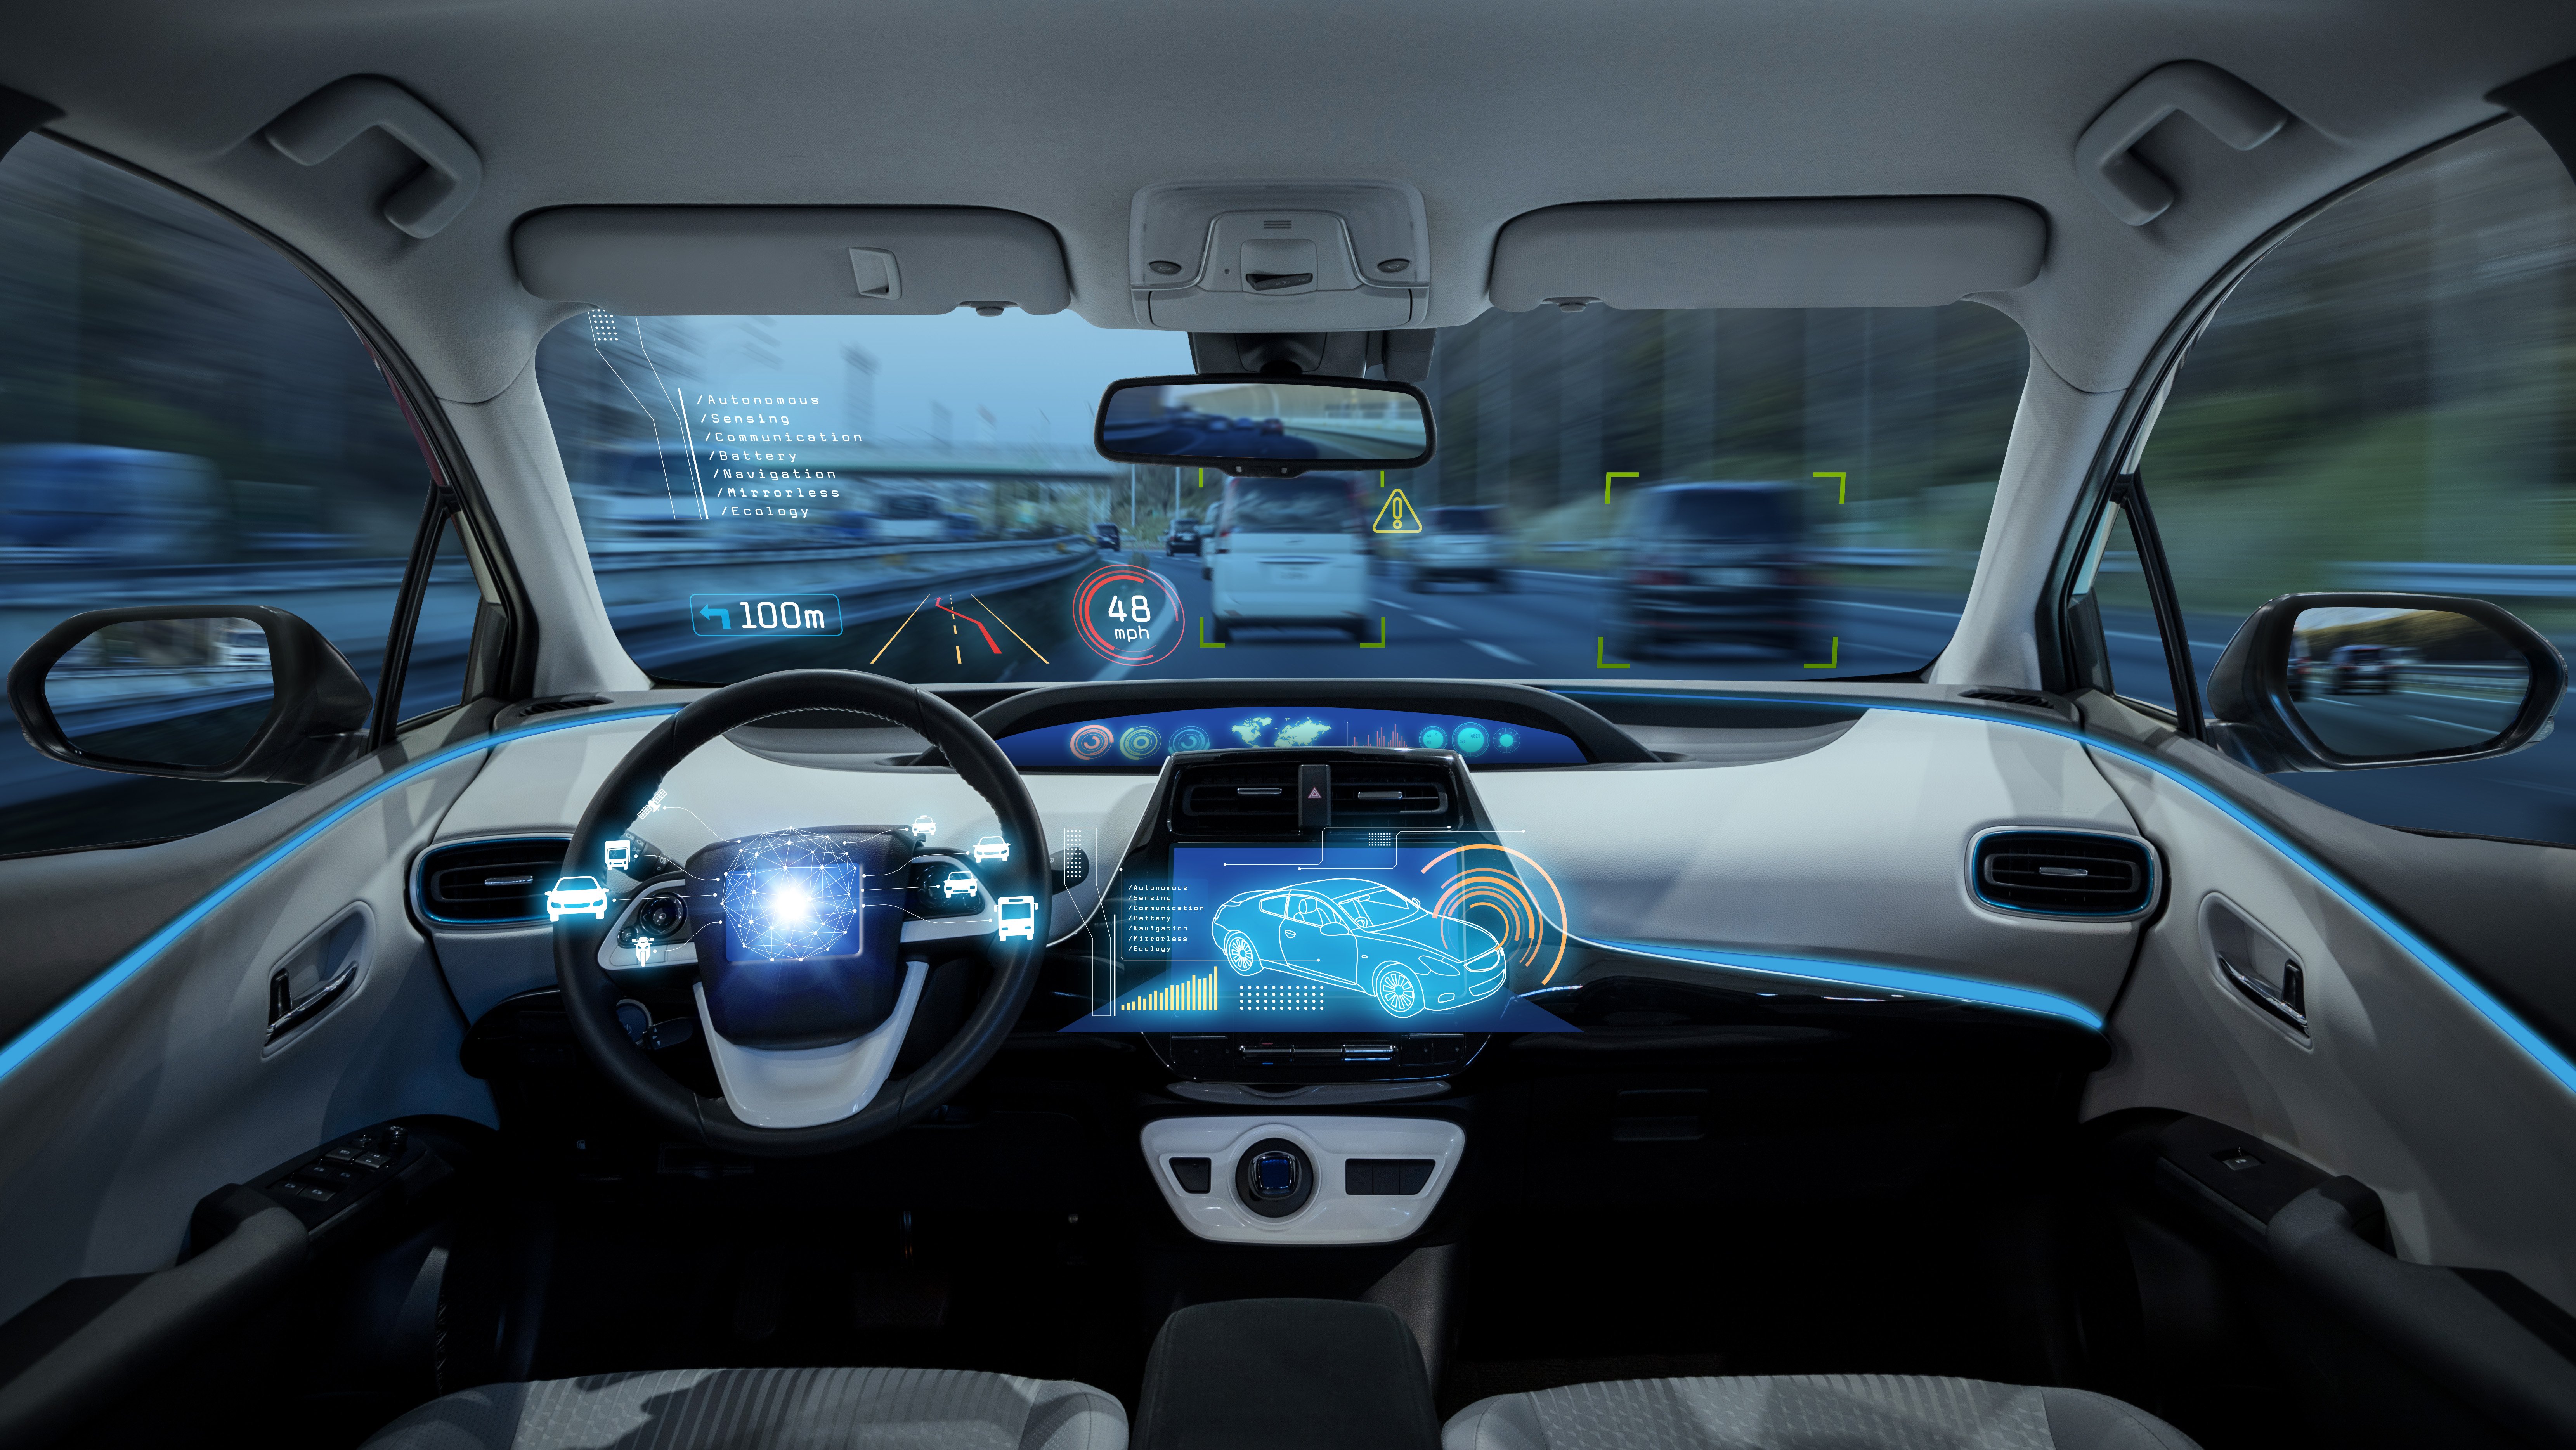 Autonomous vehicle cockpit with headsup display